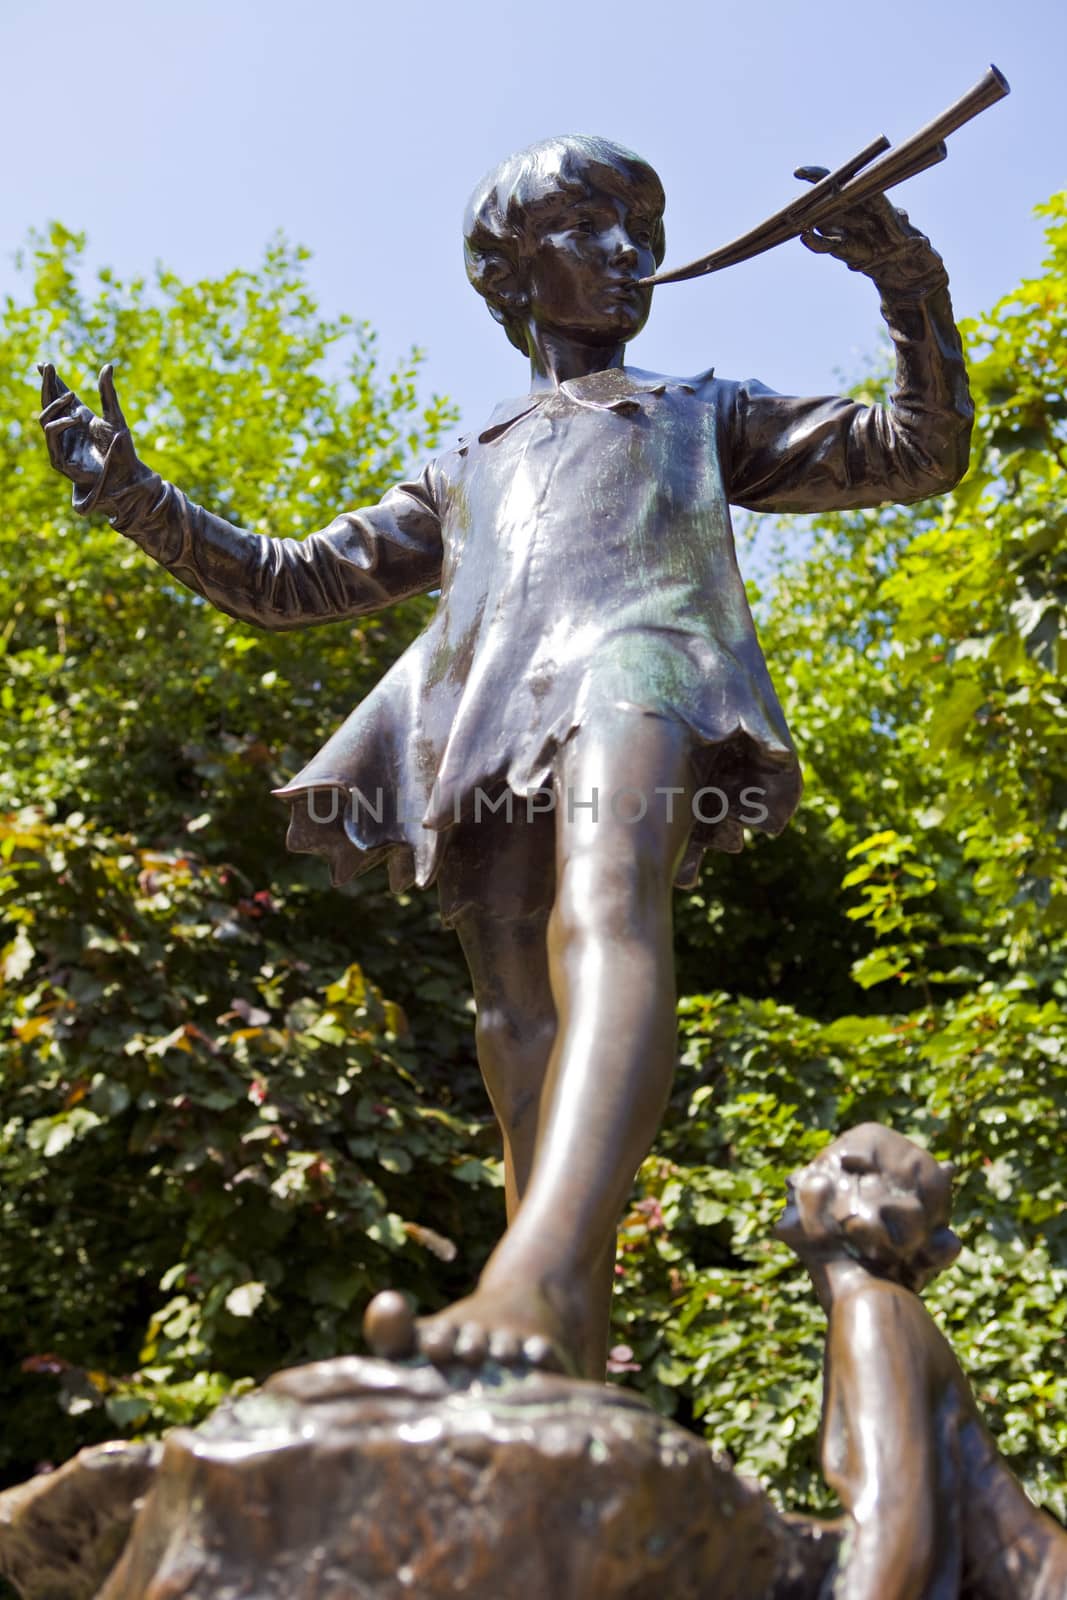 The famous Peter Pan statue in Kensington Gardens, London.